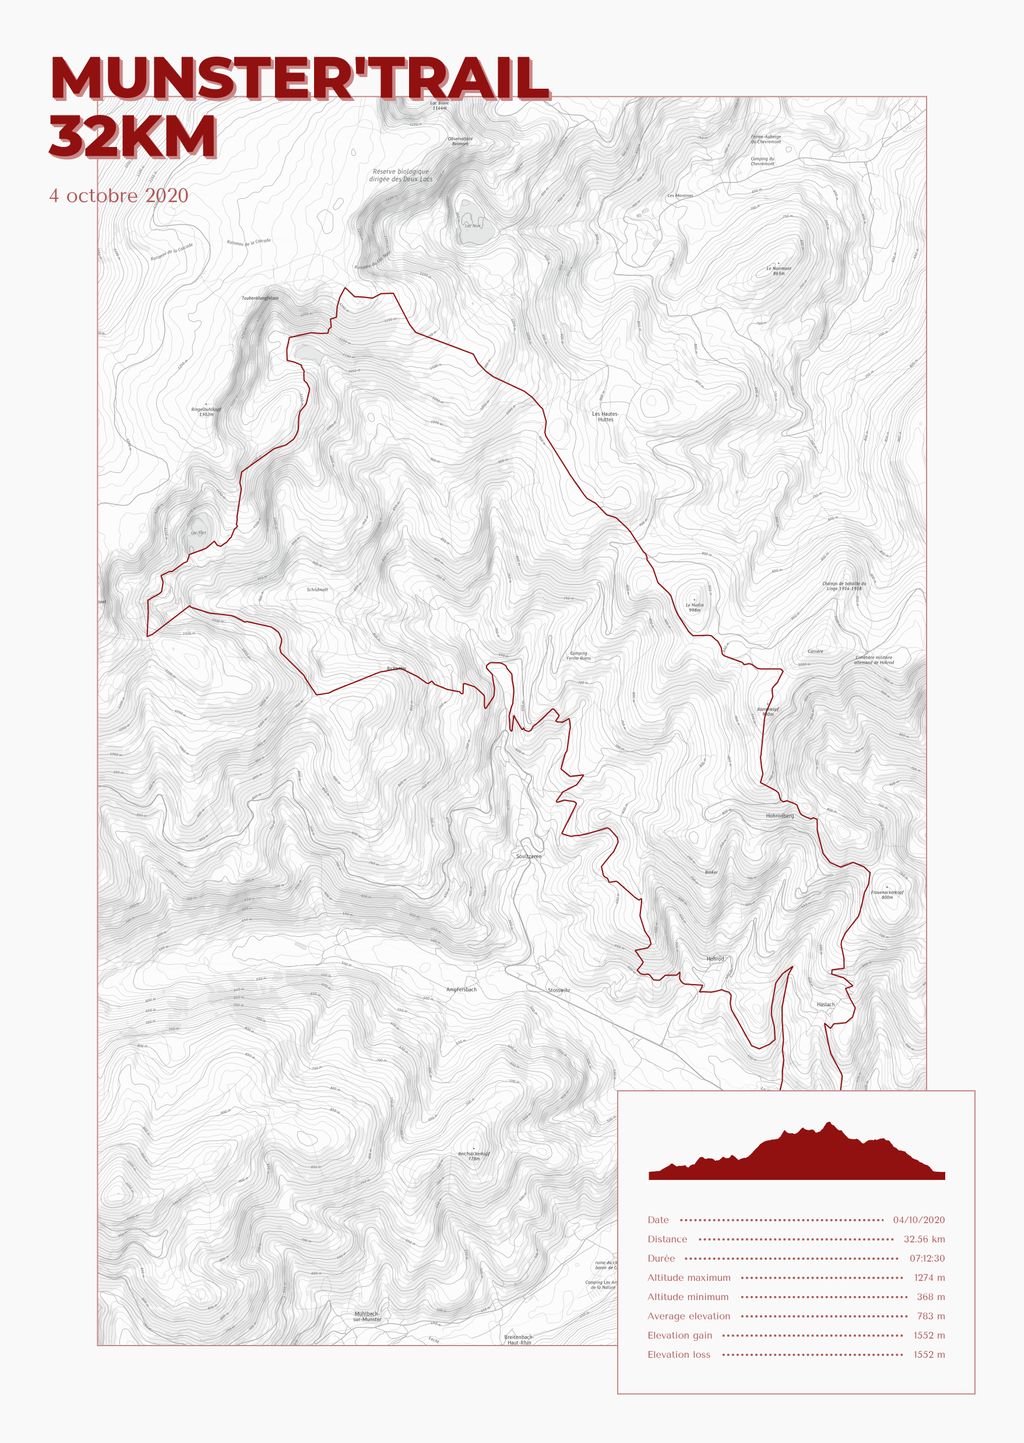 Póster con un mapa de Munster'Trail 
32km